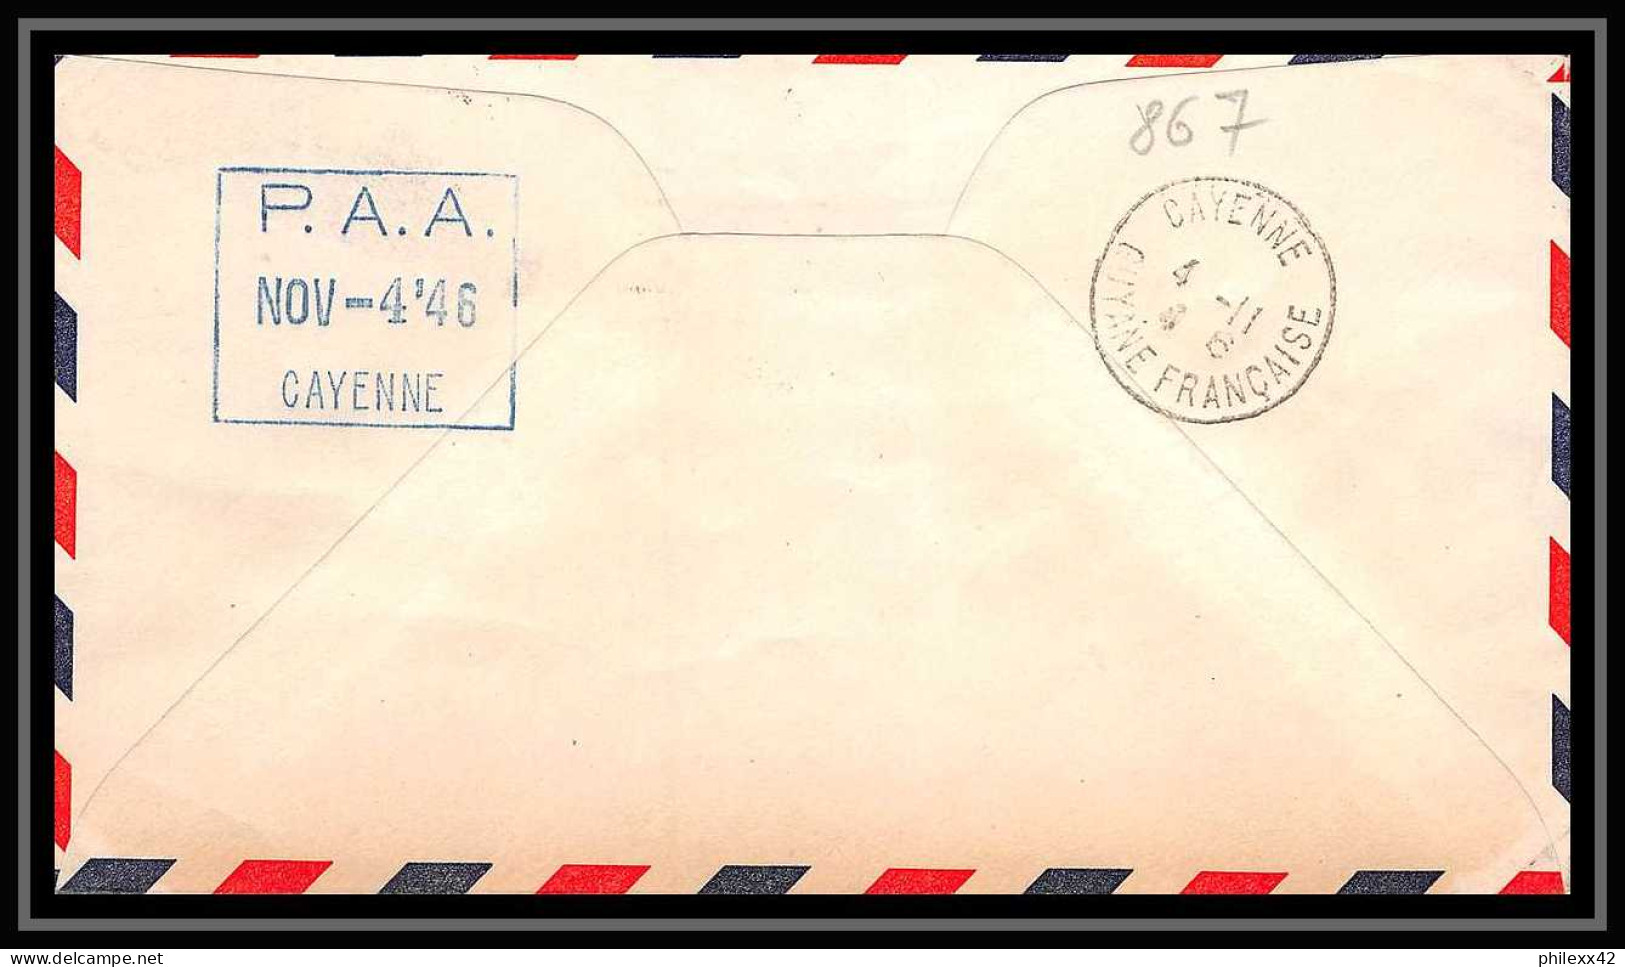 0867 Lettre Aviation (Airmail Cover Luftpost) USA Premier Vol (first Flight) 1946 Cicero Illinois Cayenne Guyane - Storia Postale